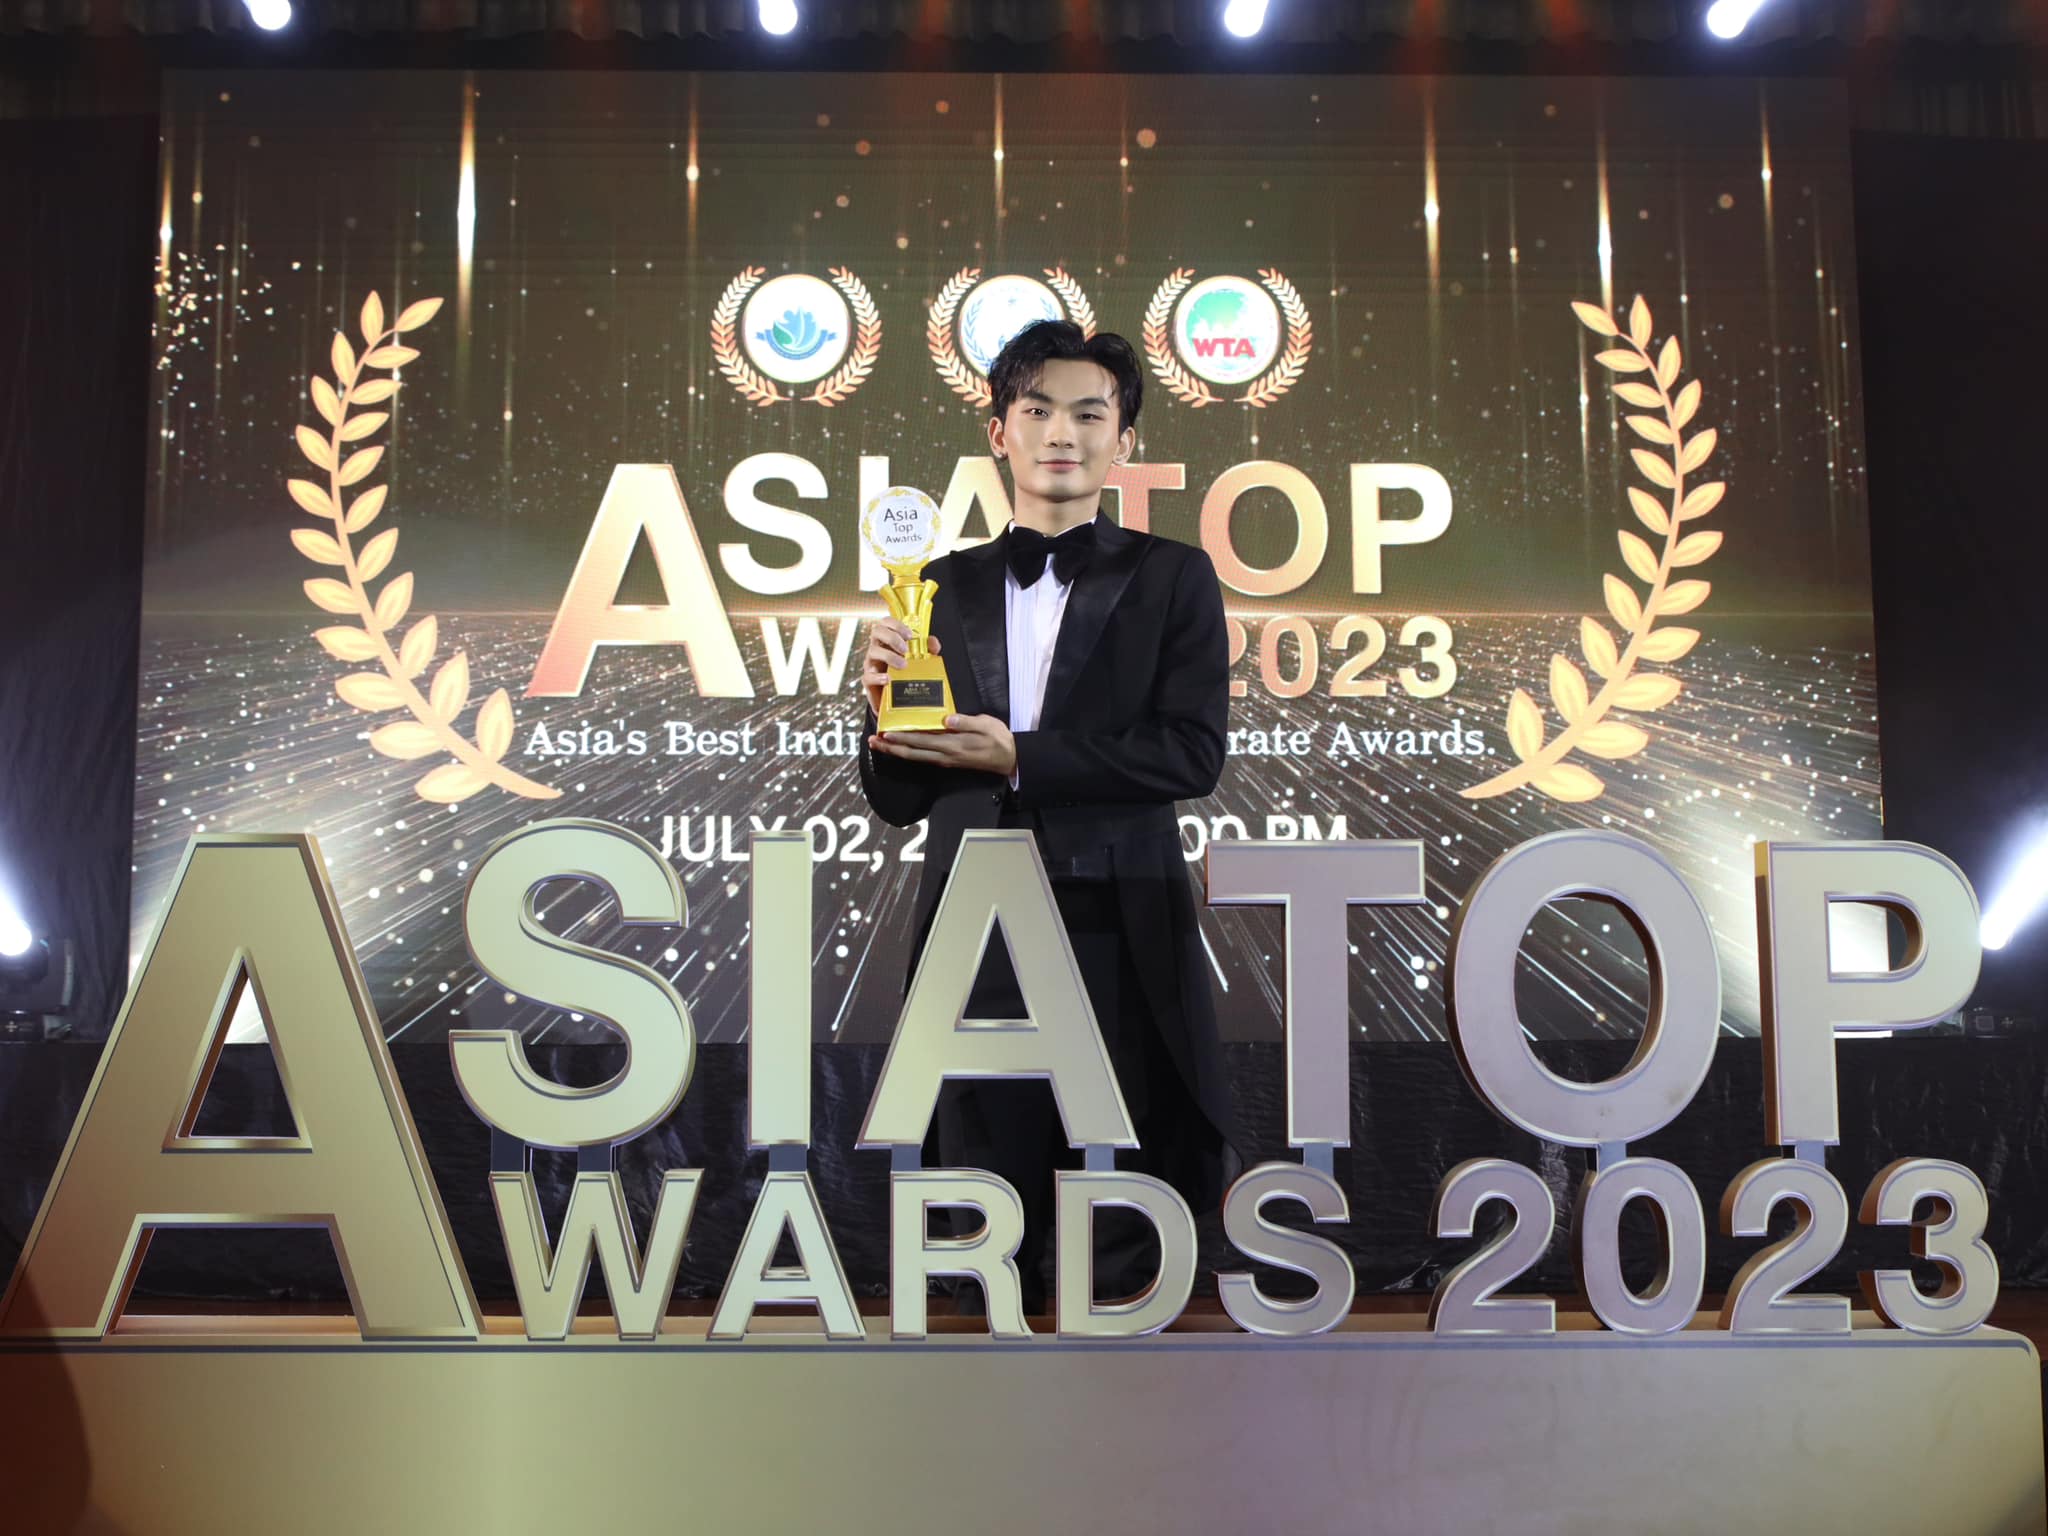 Best Dancer - Asia Top Awards 2023